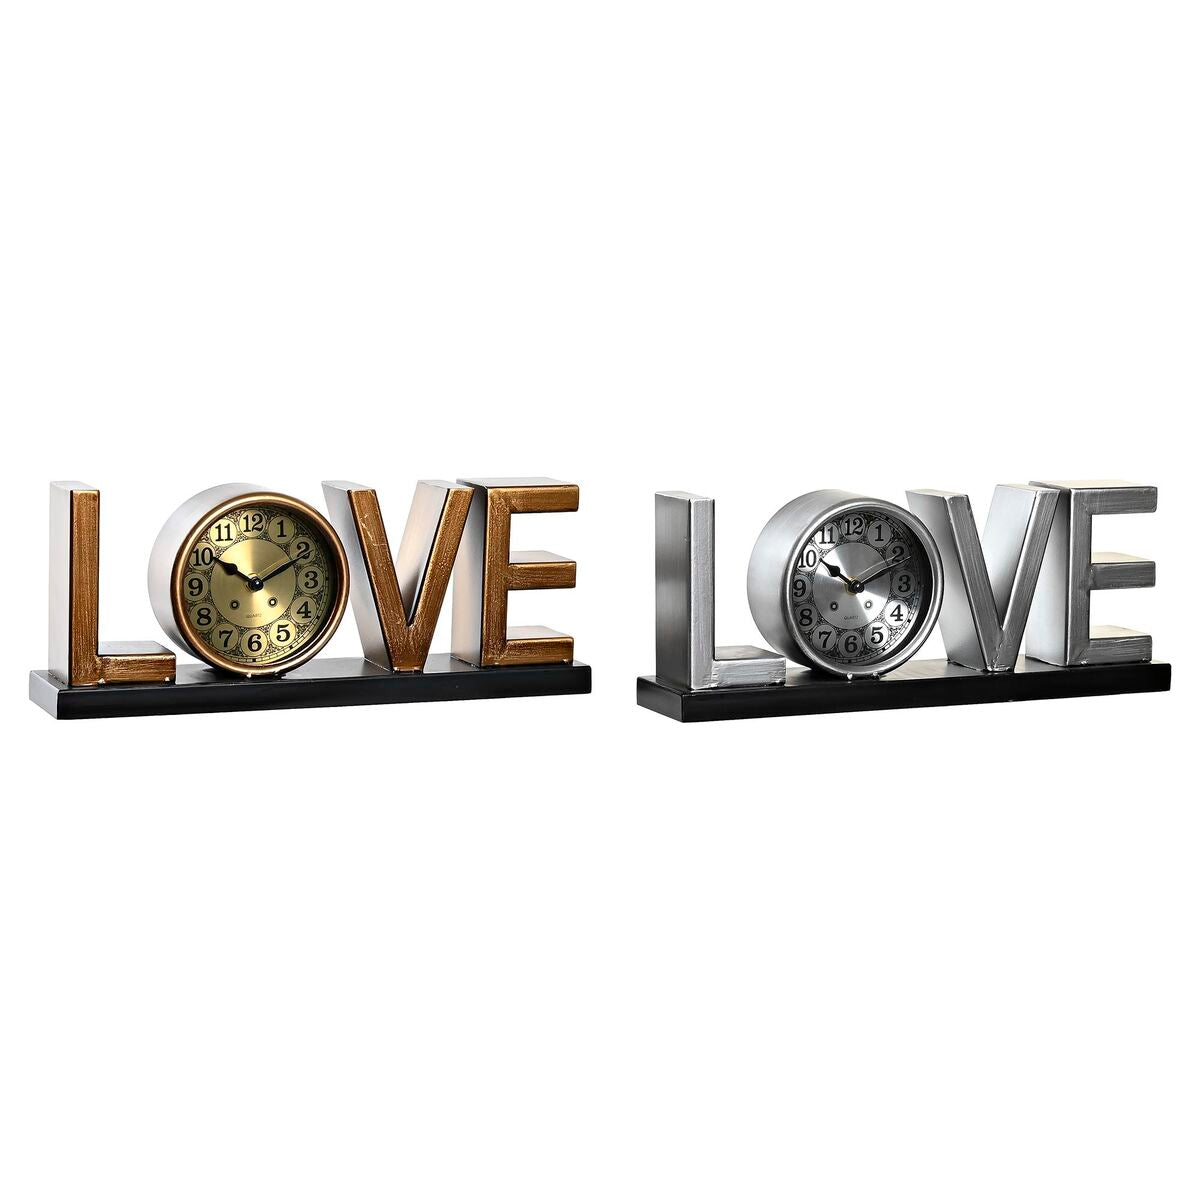 Reloj de Mesa LOVE Home Decor Cobre y Plata (39 x 8 x 15 cm) (2 Uds)